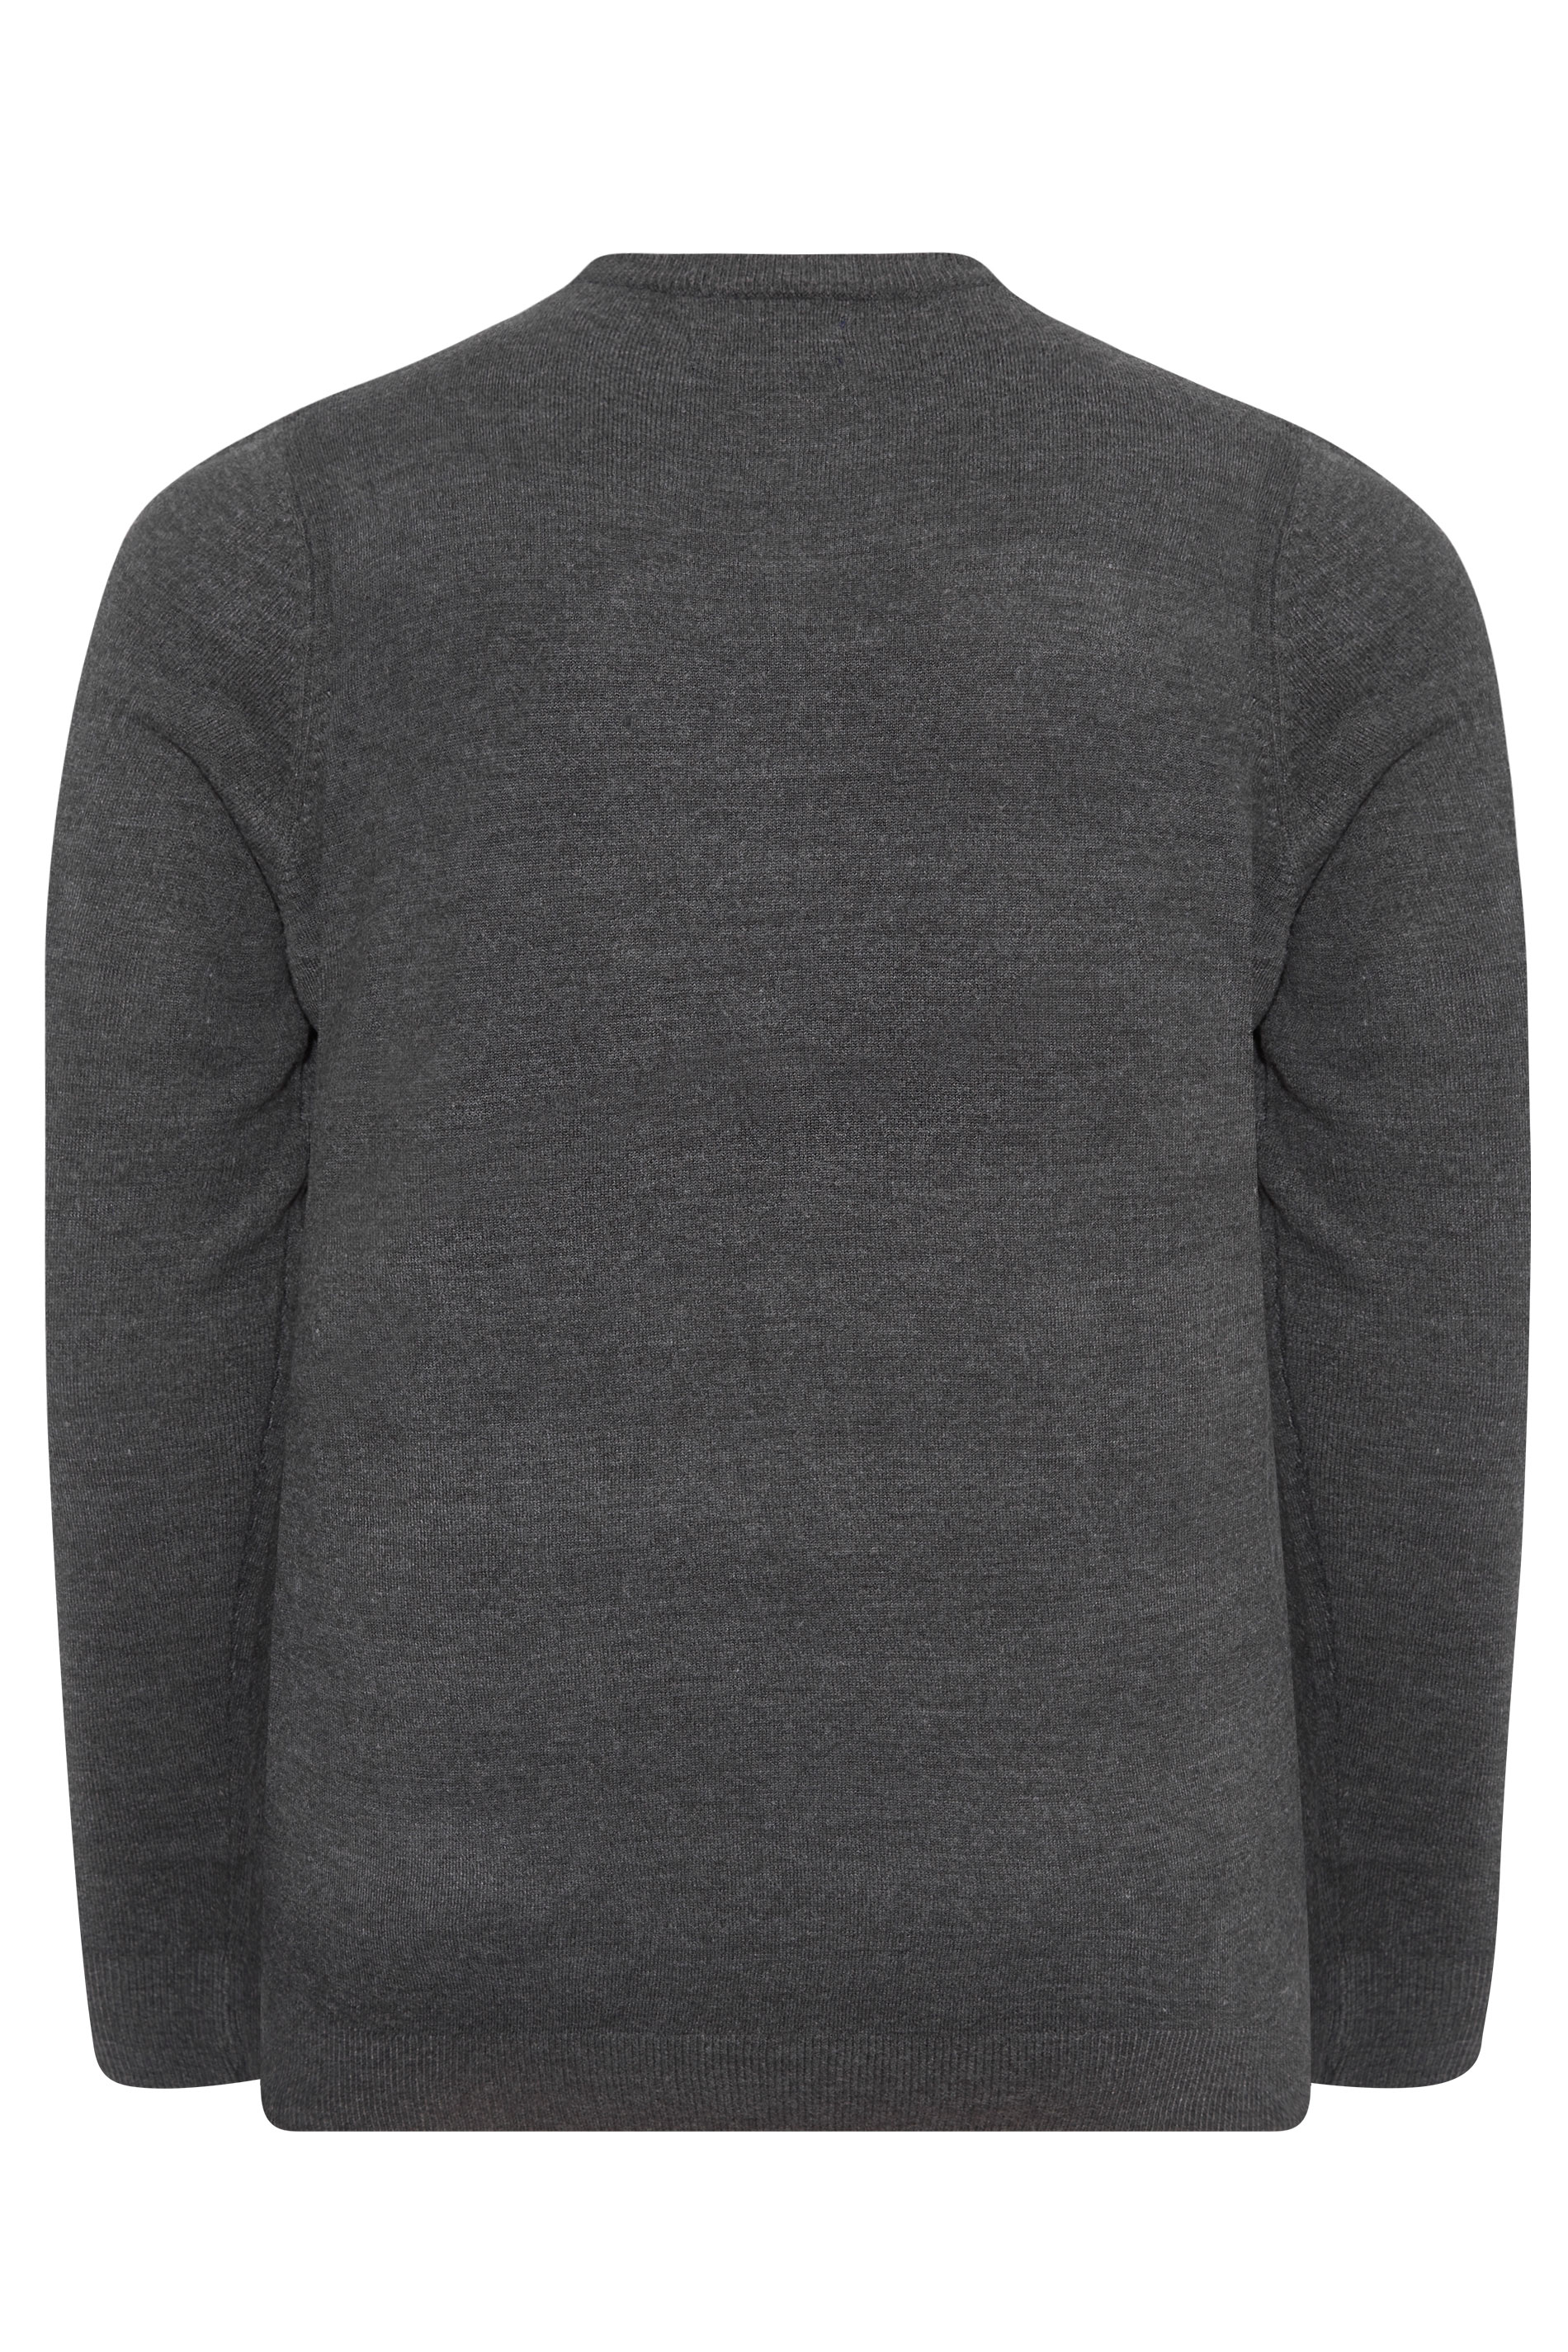 BadRhino Charcoal Grey Essential Knitted Jumper | BadRhino 3